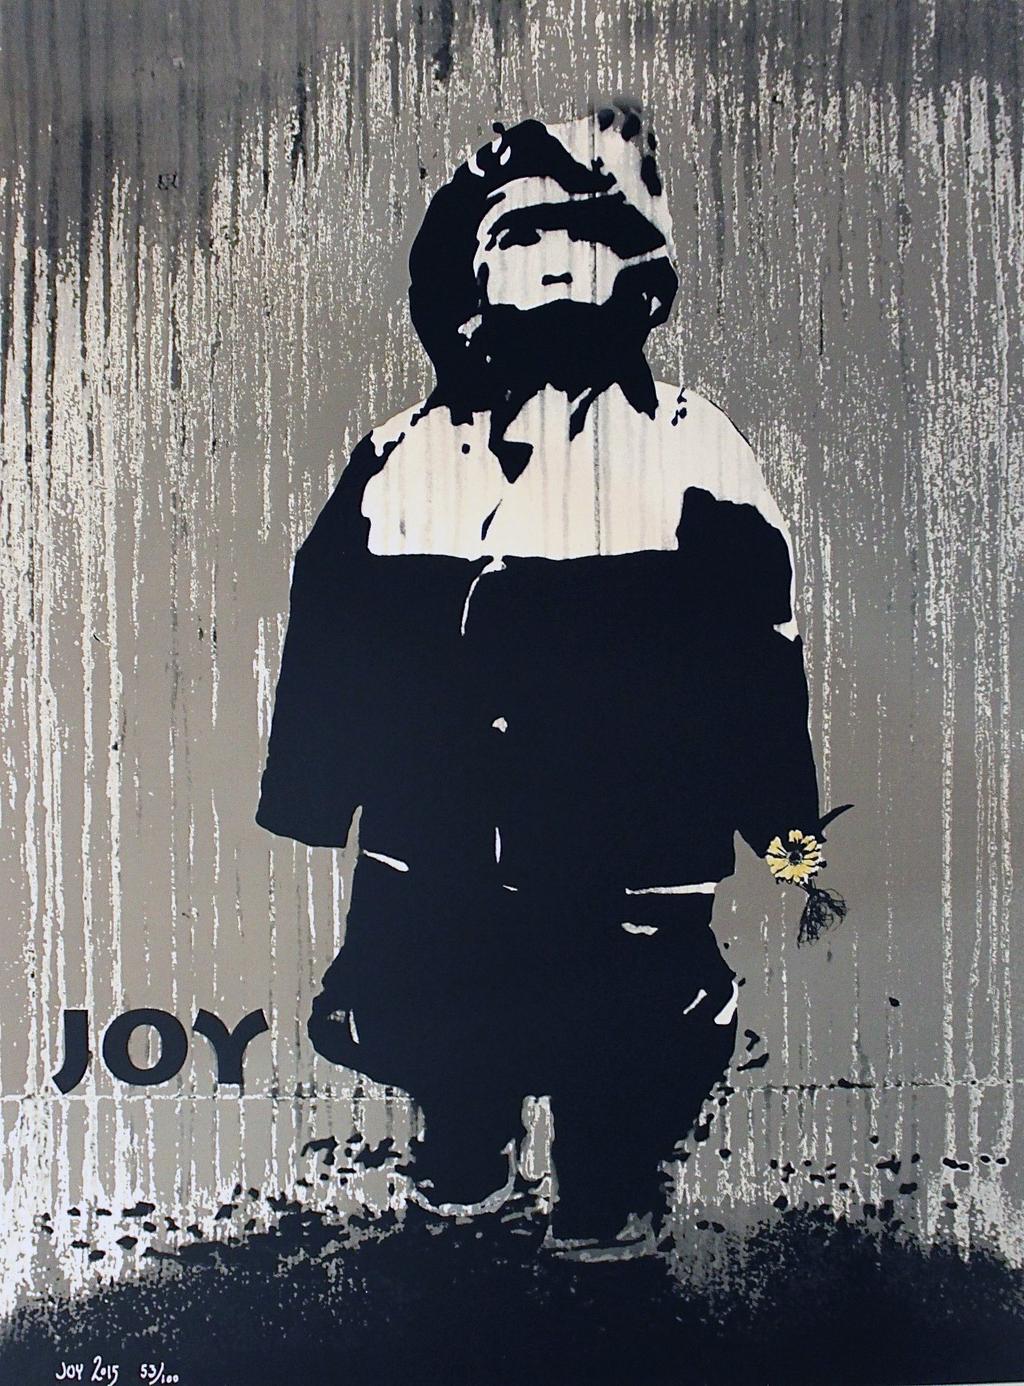 7 Joy Rainy Day Kid print * Solgt * Medium: Silketrykk, innrammet Opplag: 50